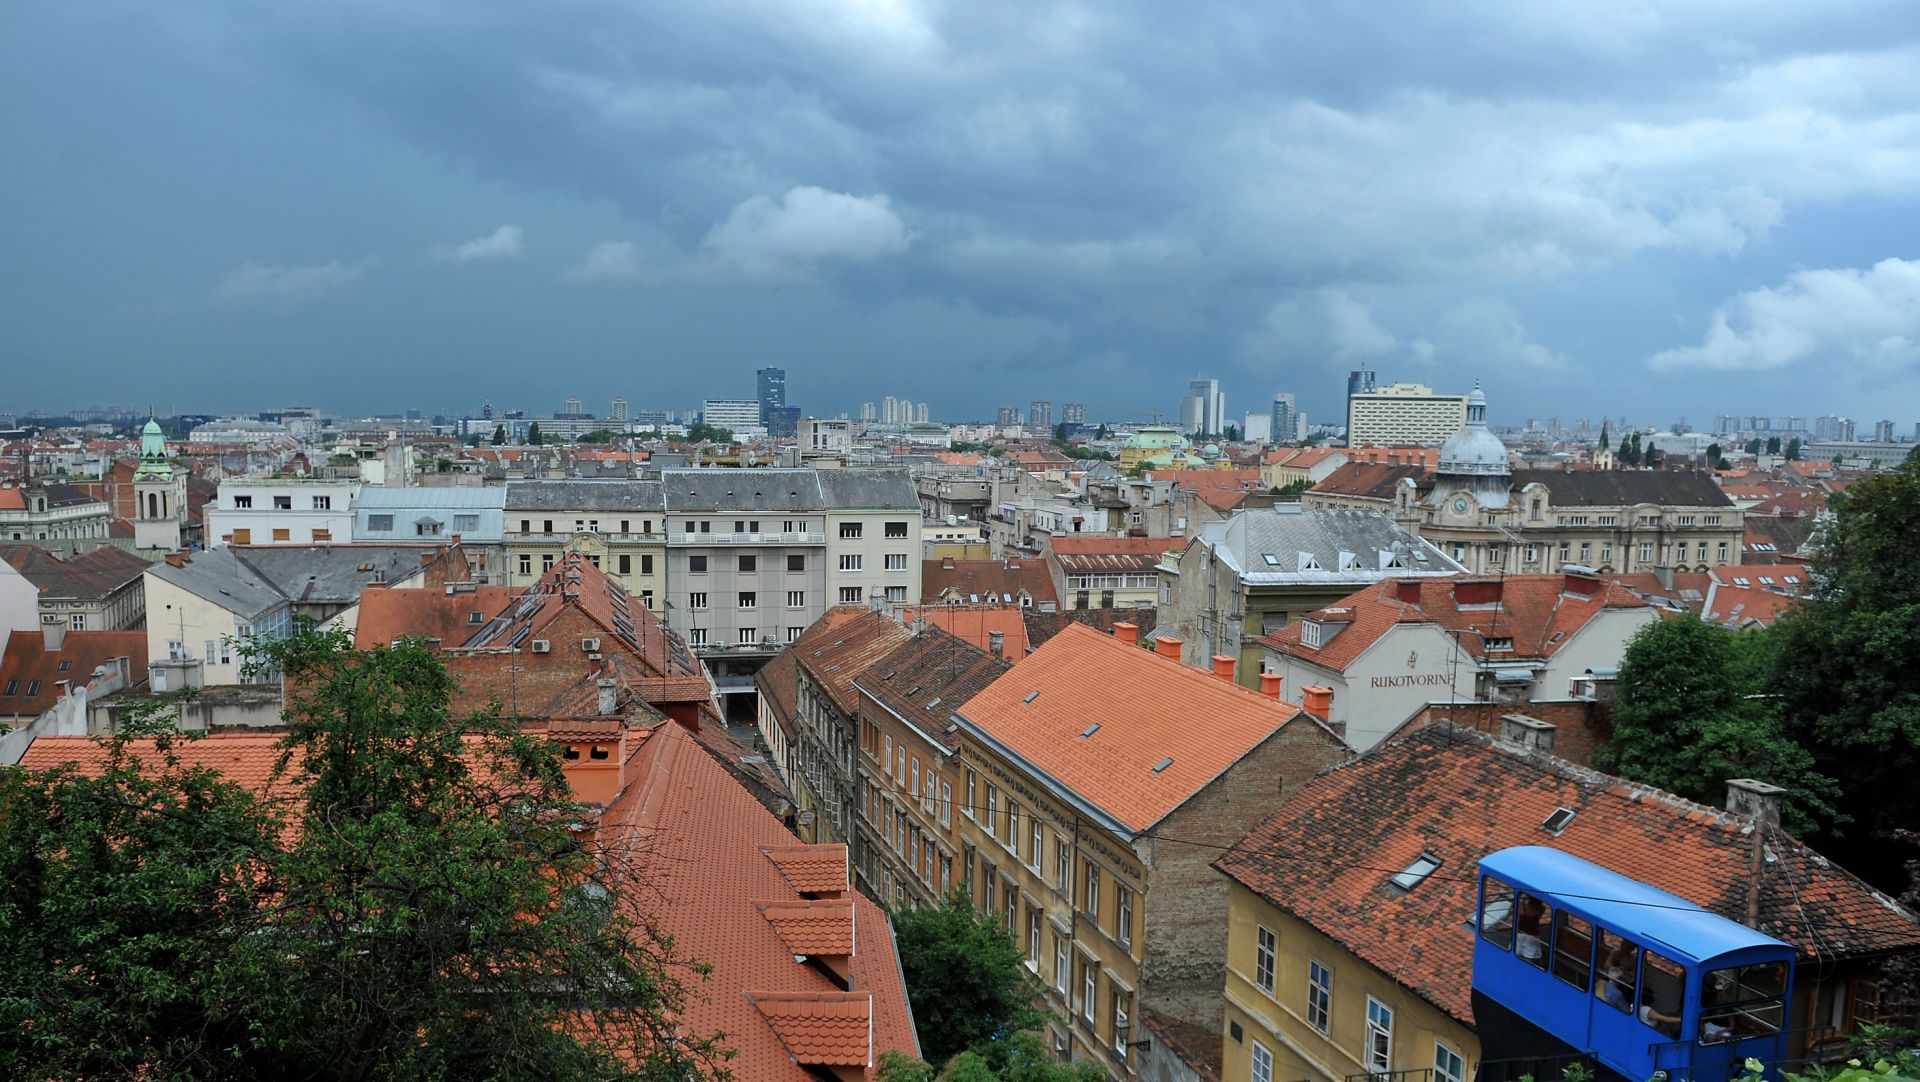 01.07.2009., Zagreb - Pogled s Gornjeg grada po kisnom i oblacnom vremenu. 
Photo: Marko Lukunic/Vecernji list